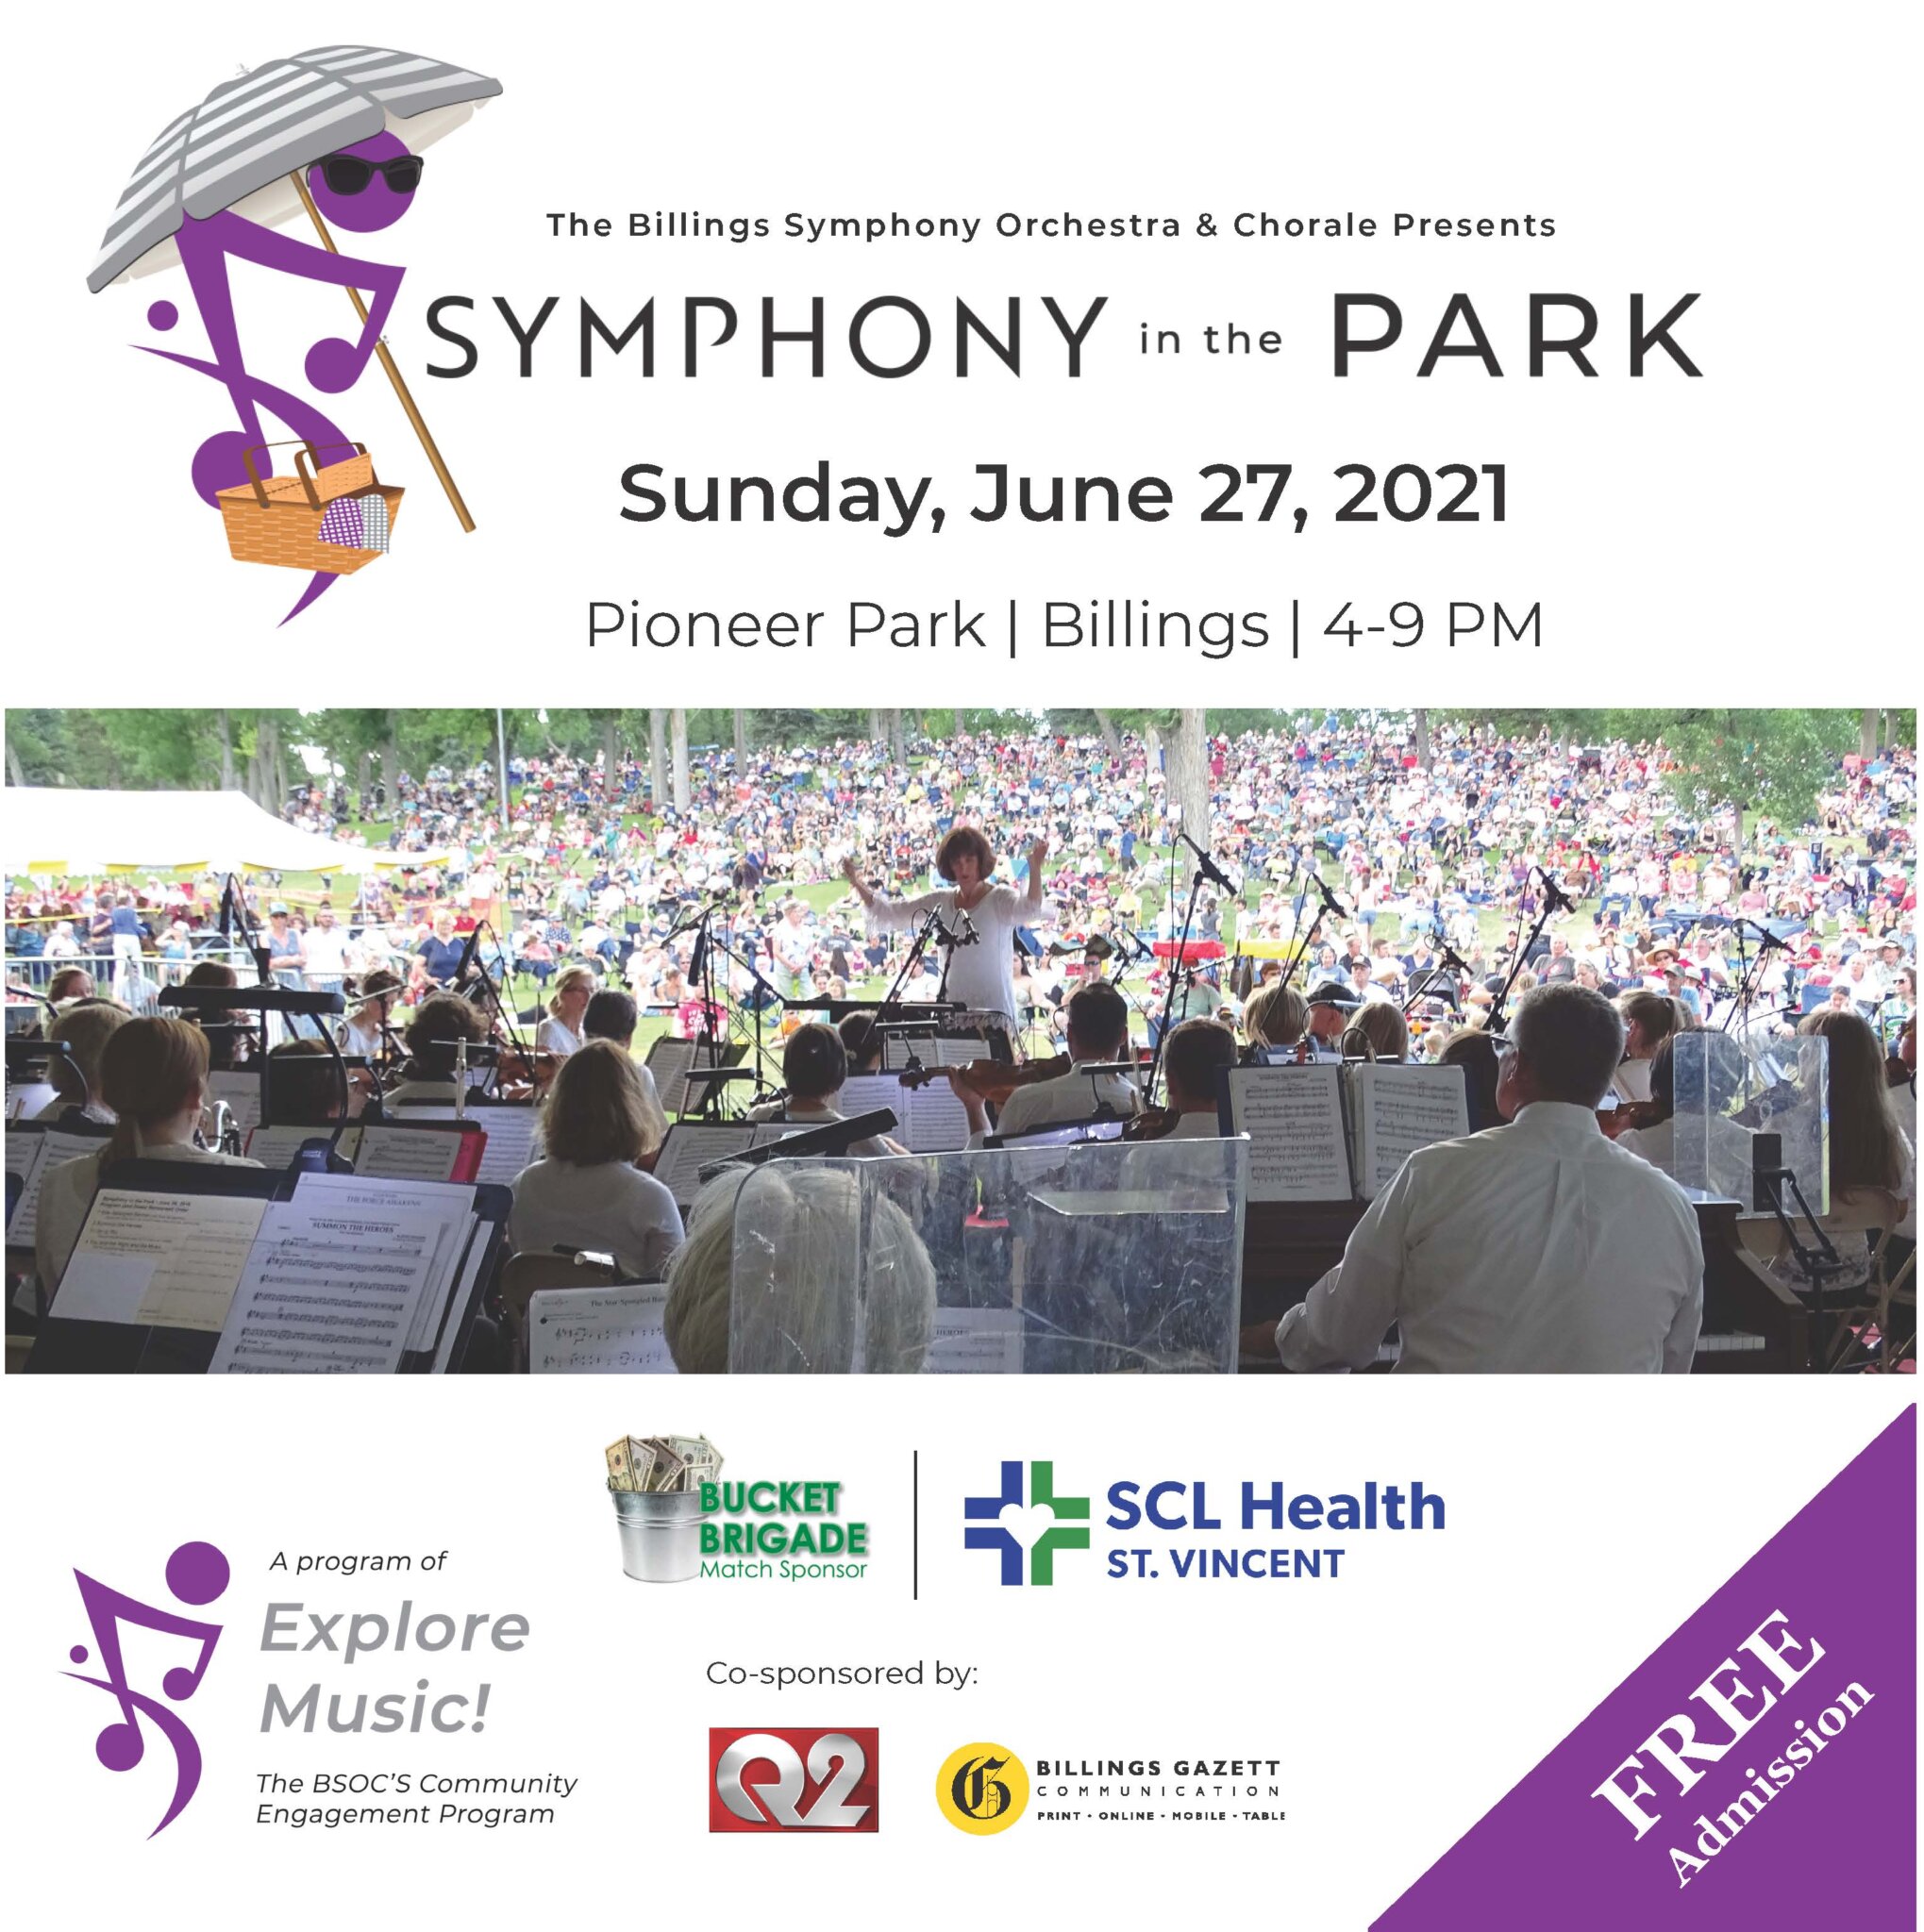 Symphony in the Park Billings Symphony Orchestra & Chorale